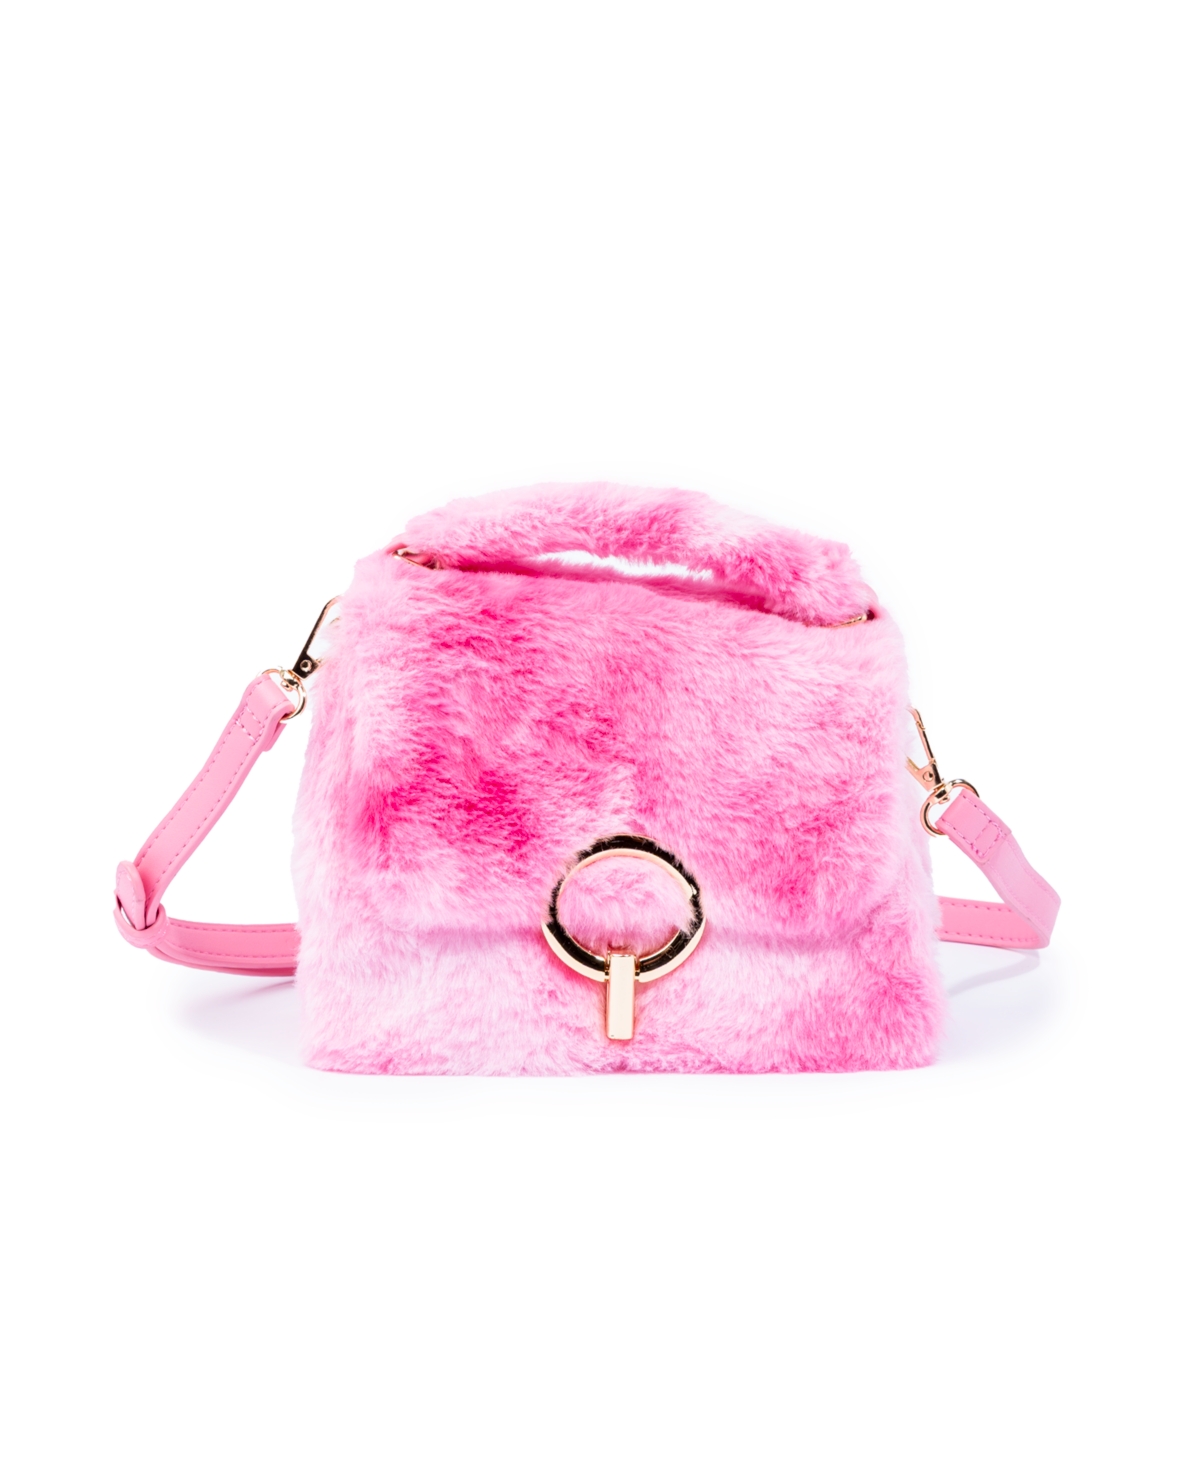 Skinnydip London April Tie Dye Fur Fluff Crossbody Bag In Pink